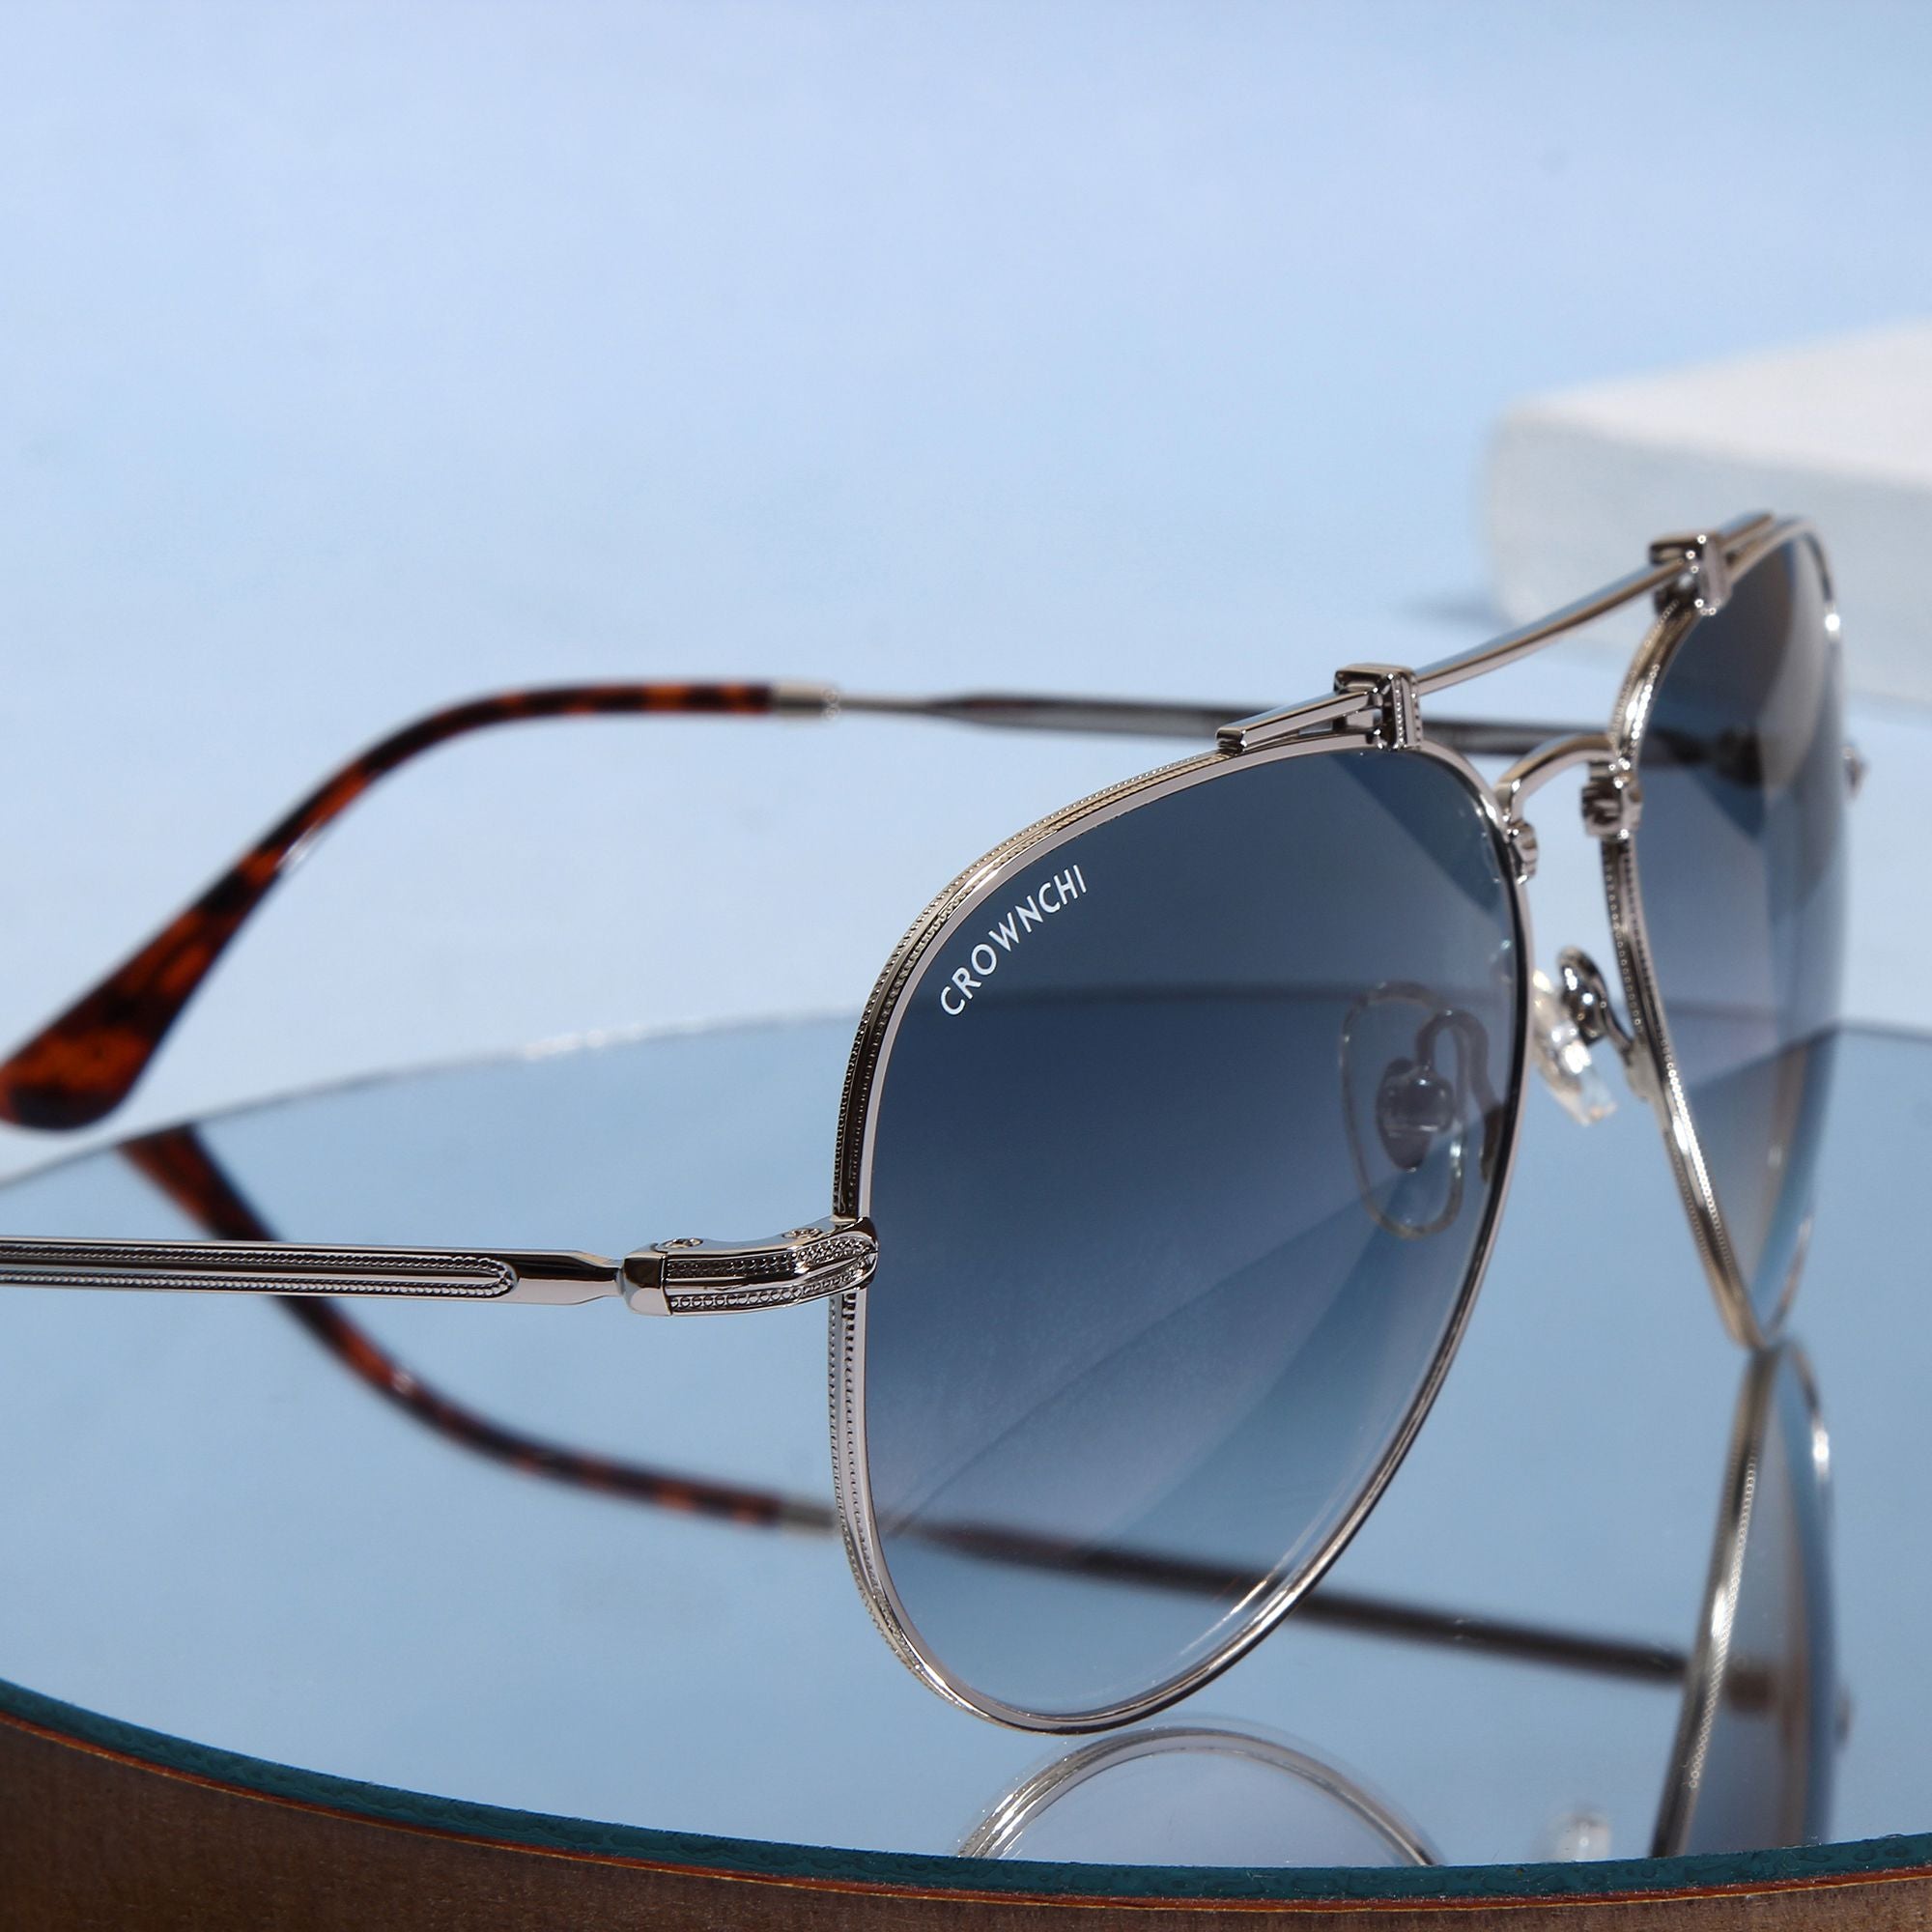 Wingman Silver Black Gradient Pilot Edition Sunglasses